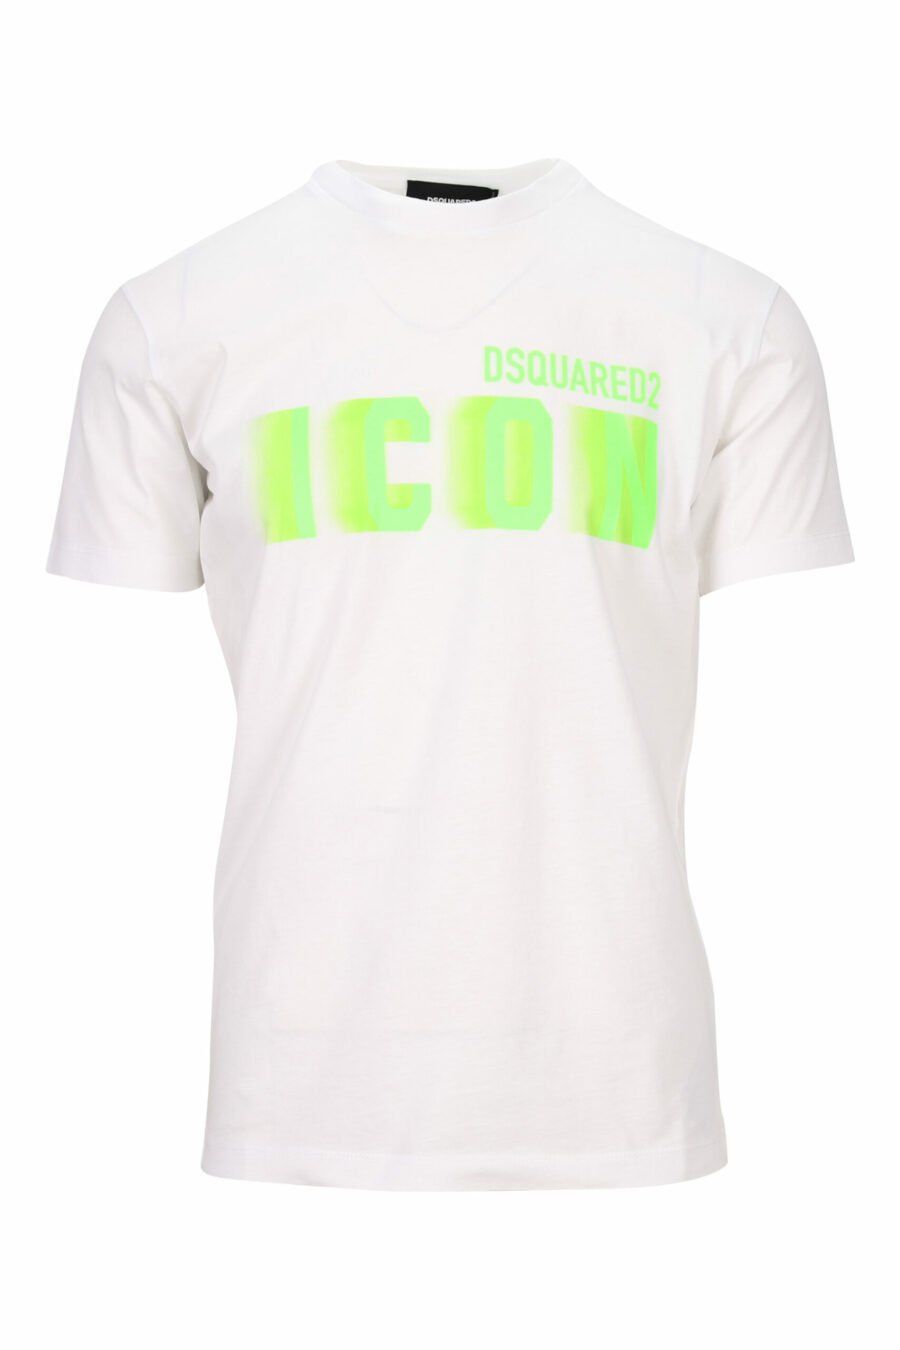 Camiseta blanca con maxilogo "icon" verde neon borroso - 8054148358914 scaled